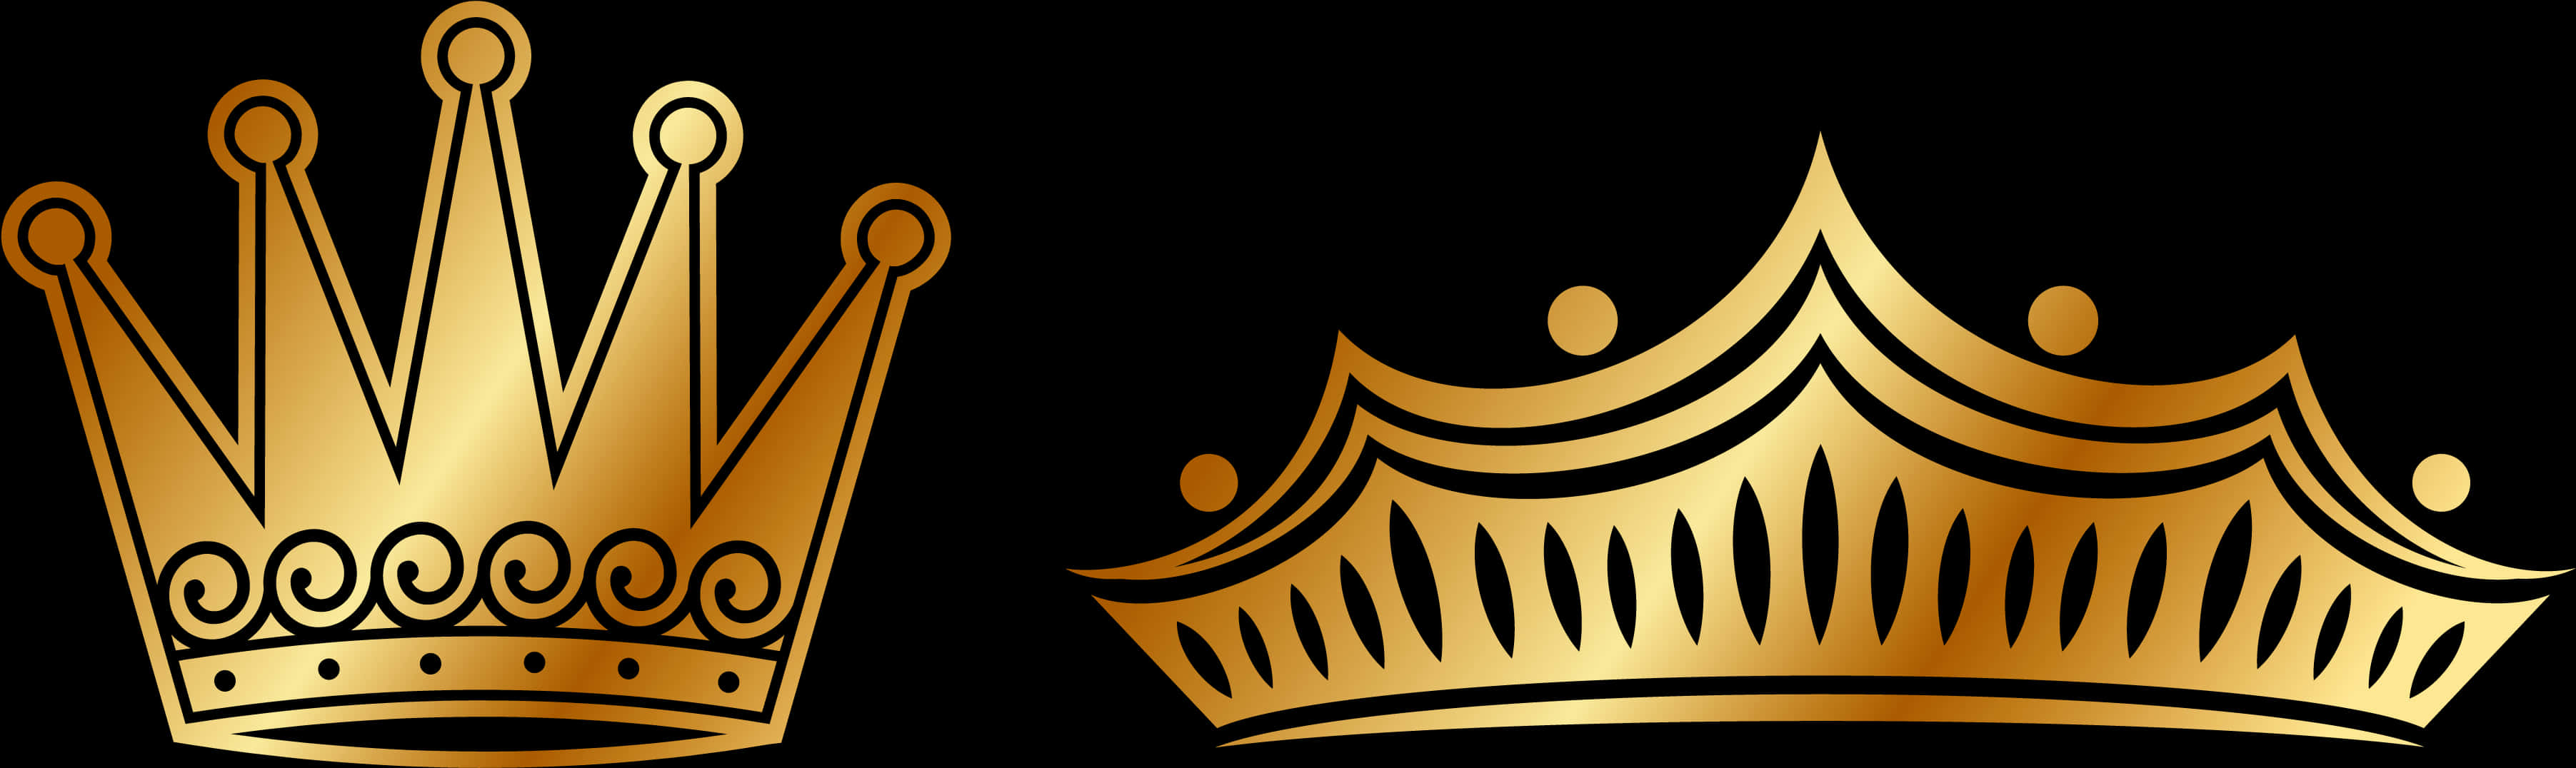 Gold Crown Pair